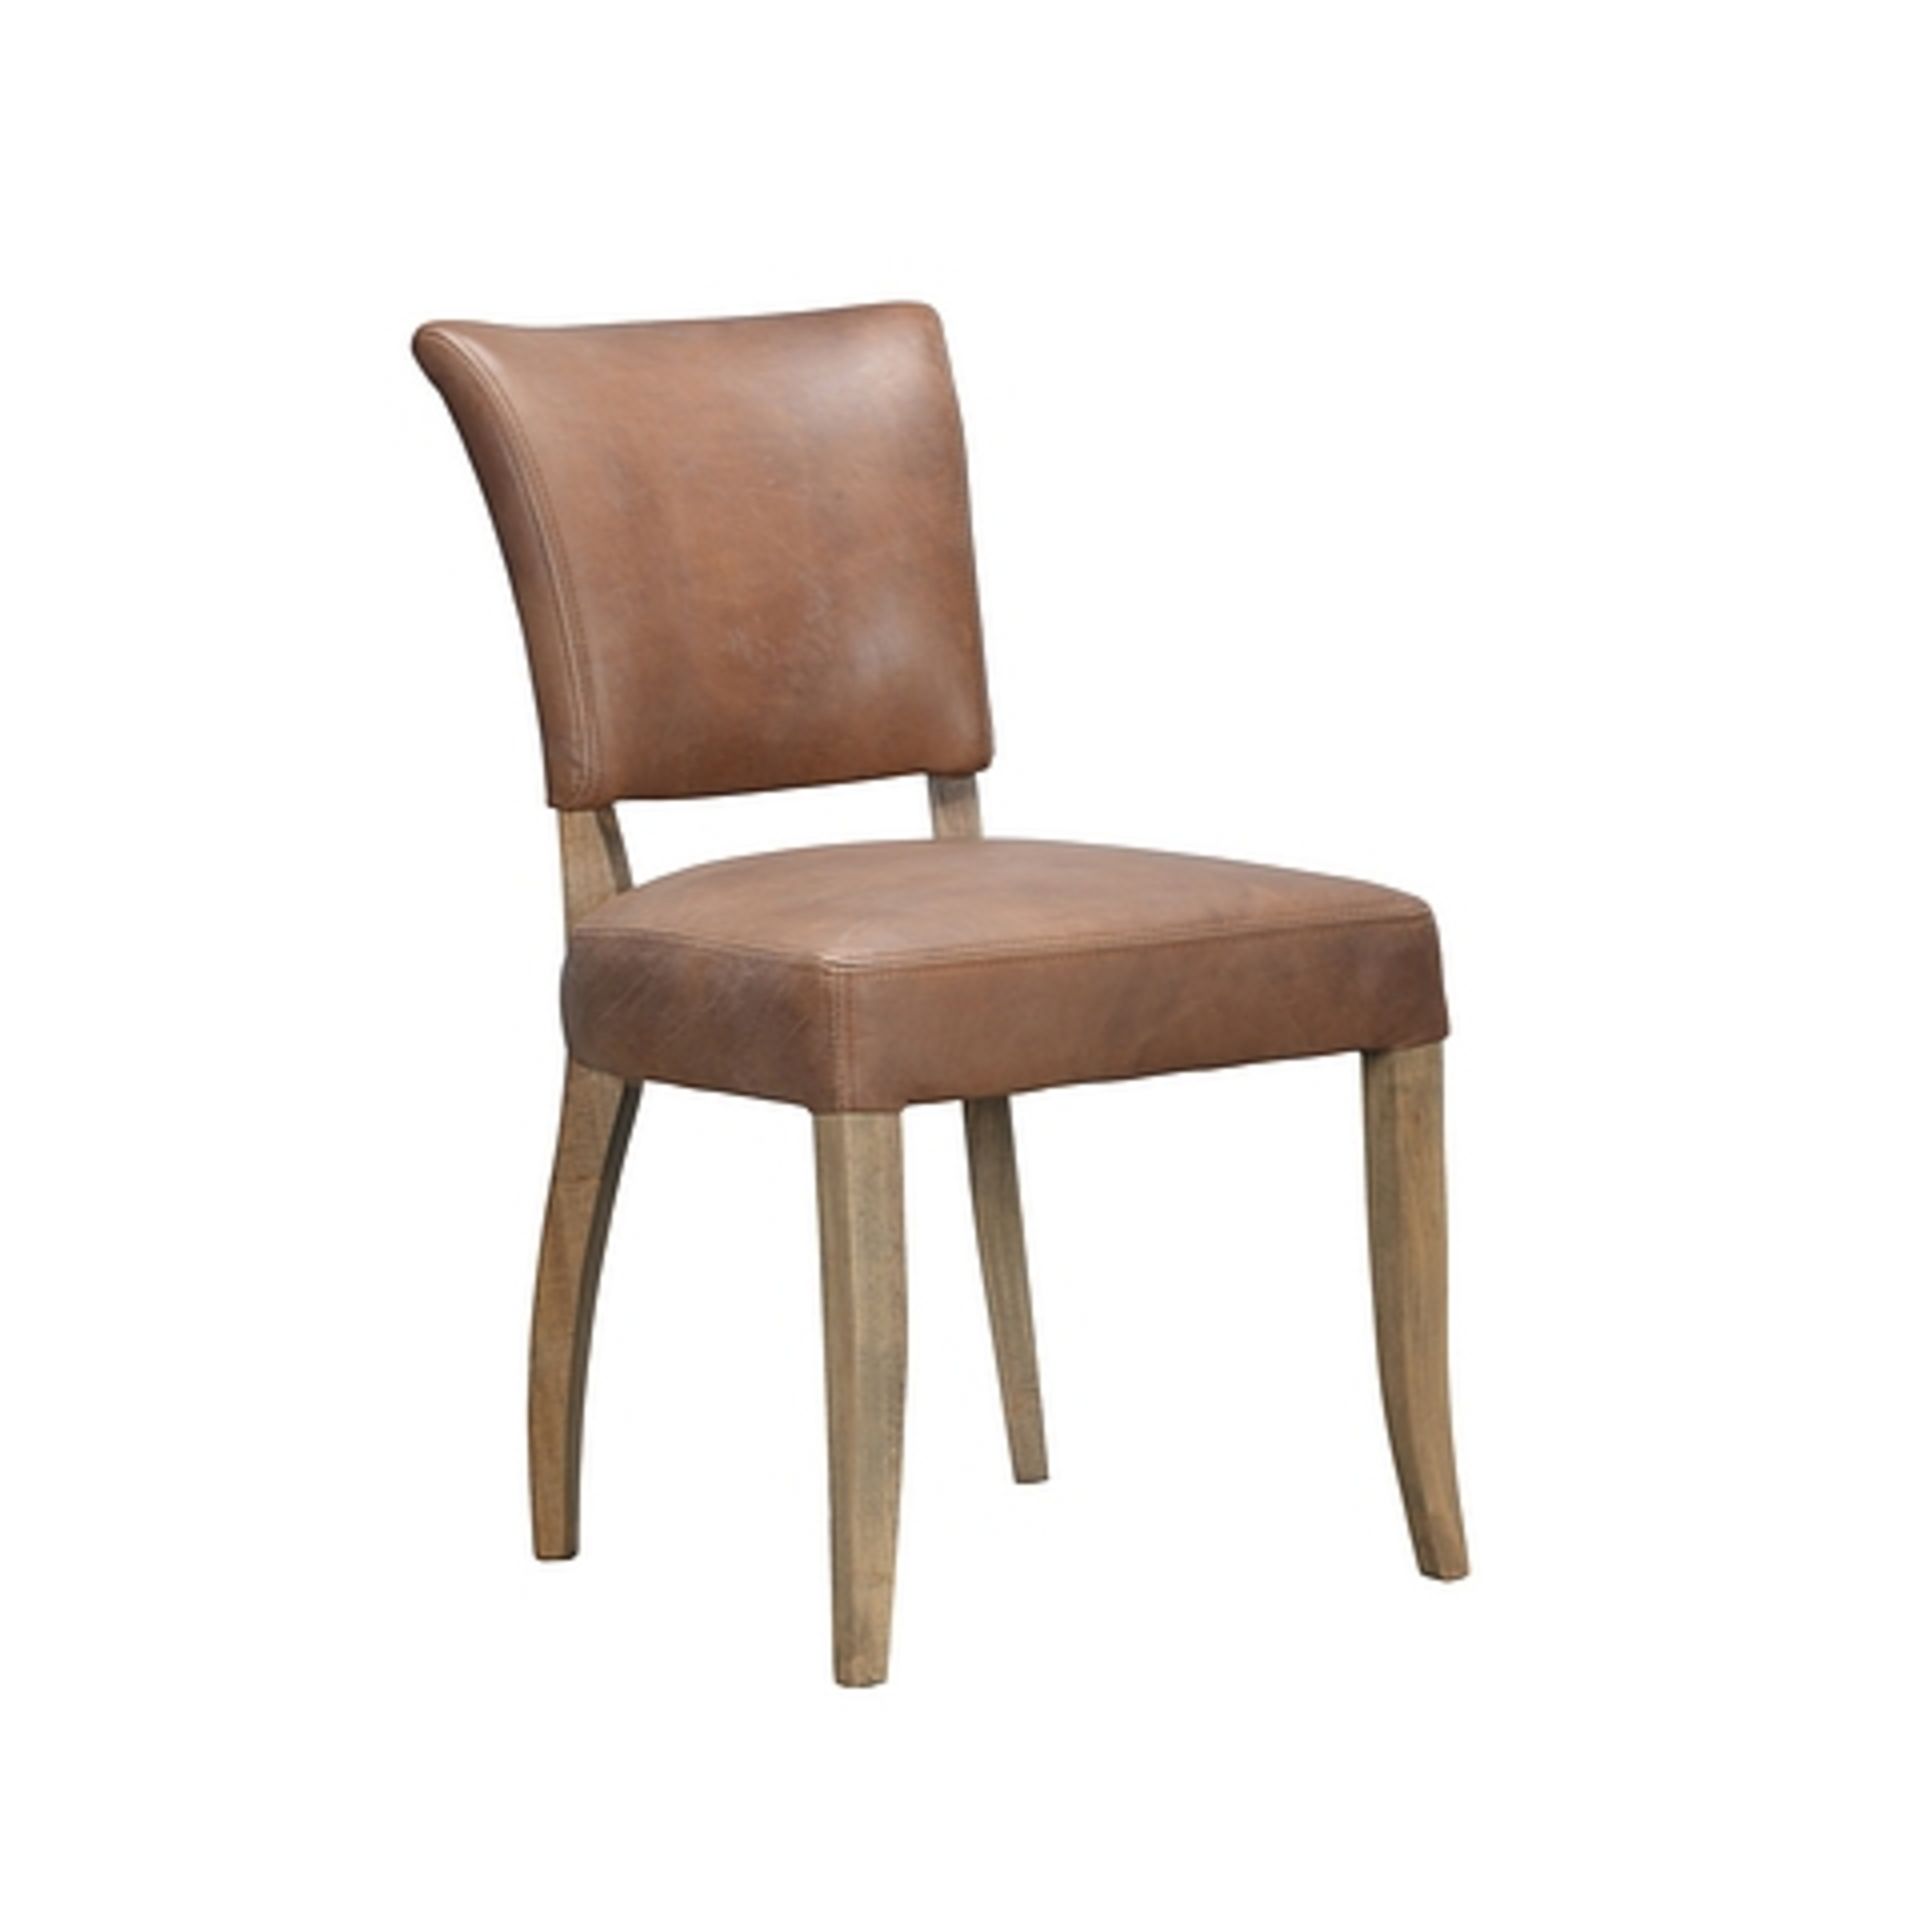 Mimi Dining Chair M.Choco & Weathered Oak 51x65x89cm RRP £ 375